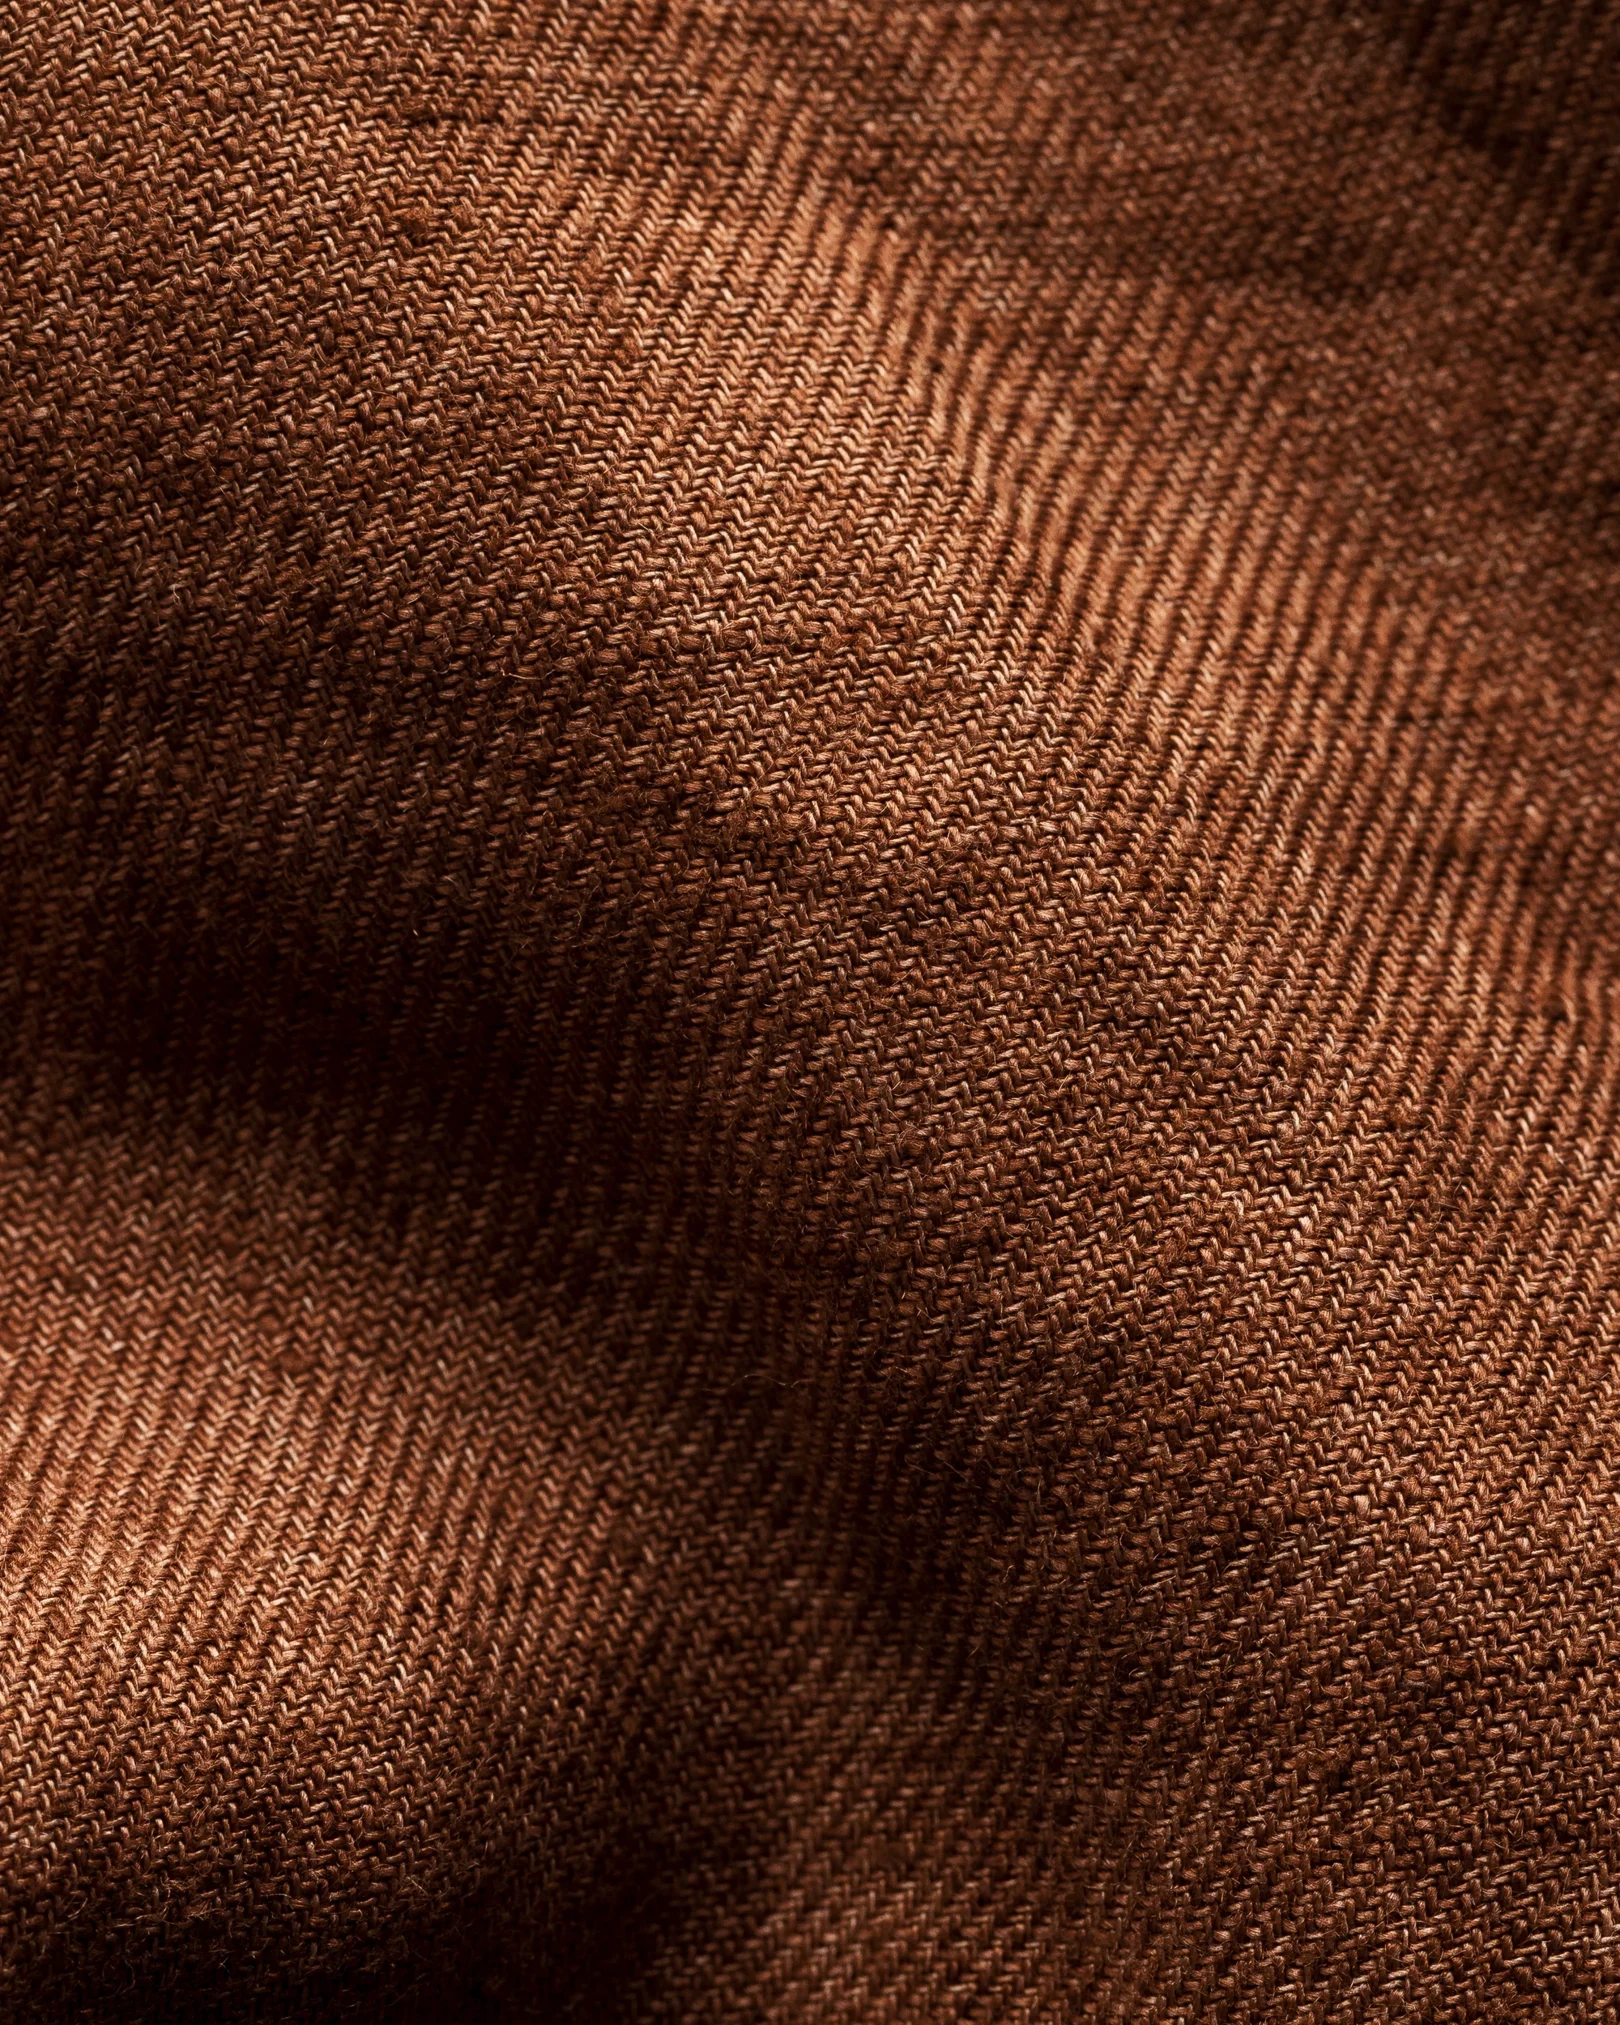 Eton - brown linen overshirt